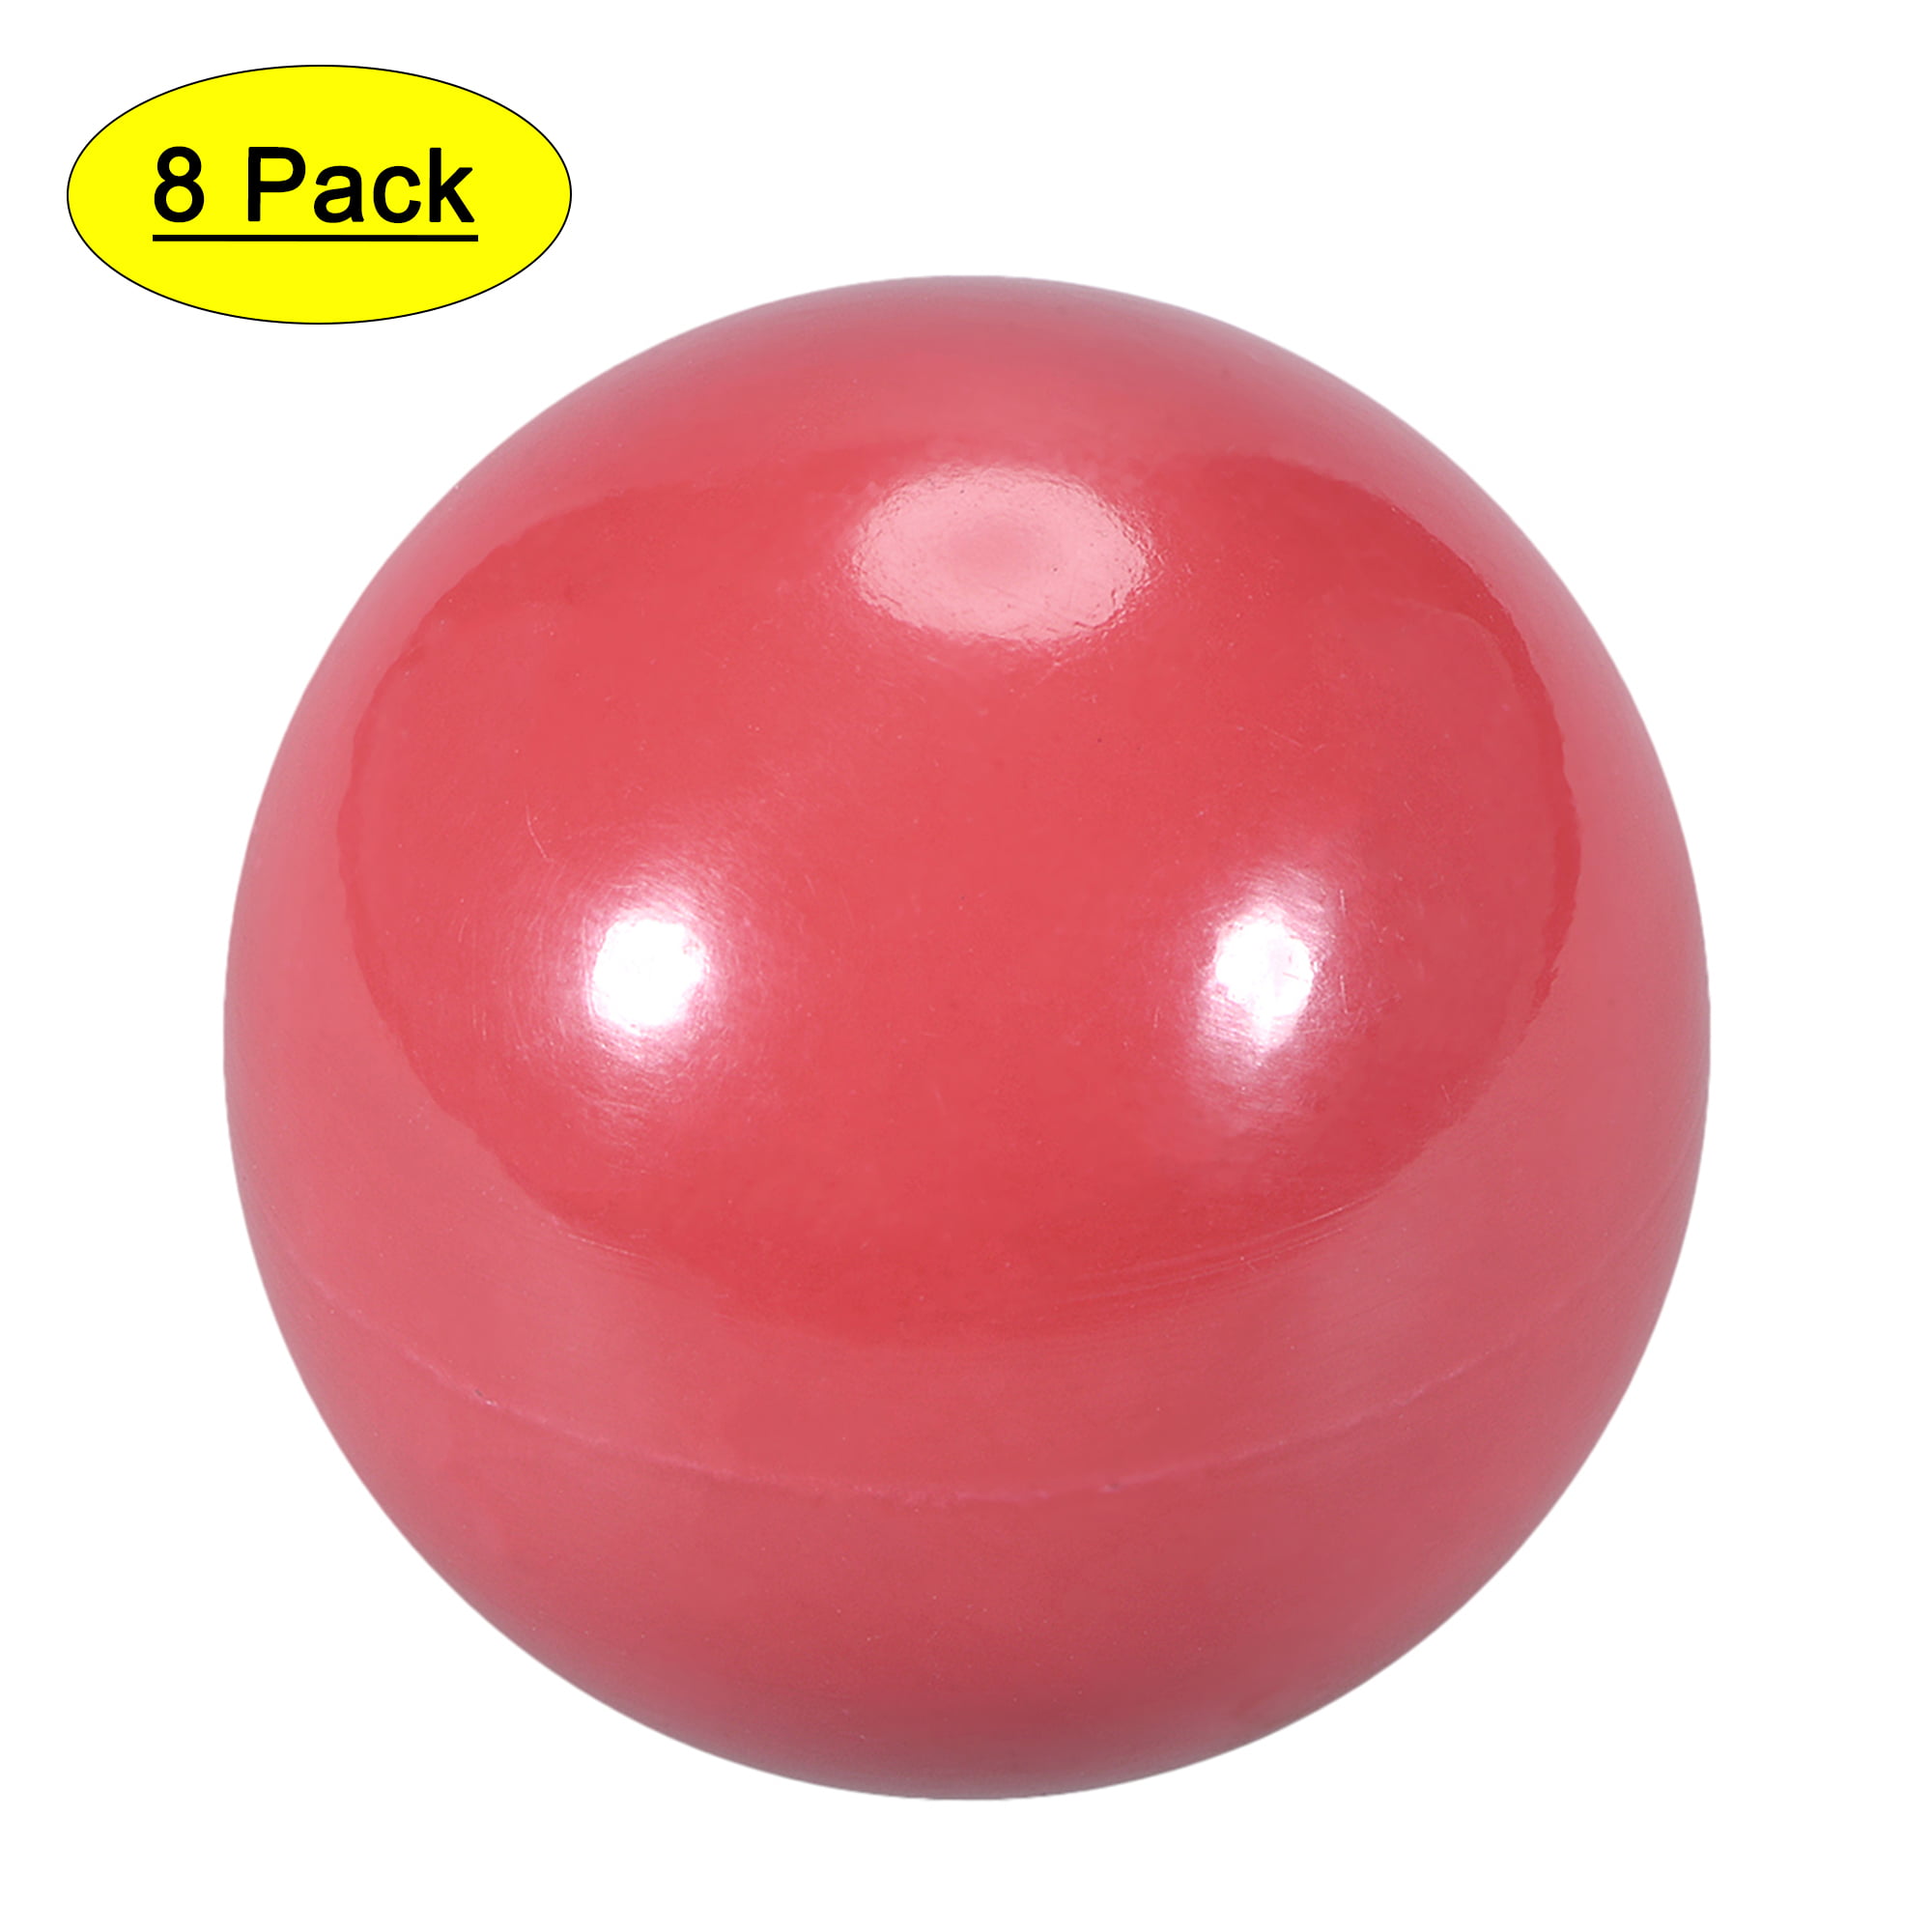 10 Pcs Thermoset Ball Knob M8 Female Thread Machine Handle 32mm Diameter Red 